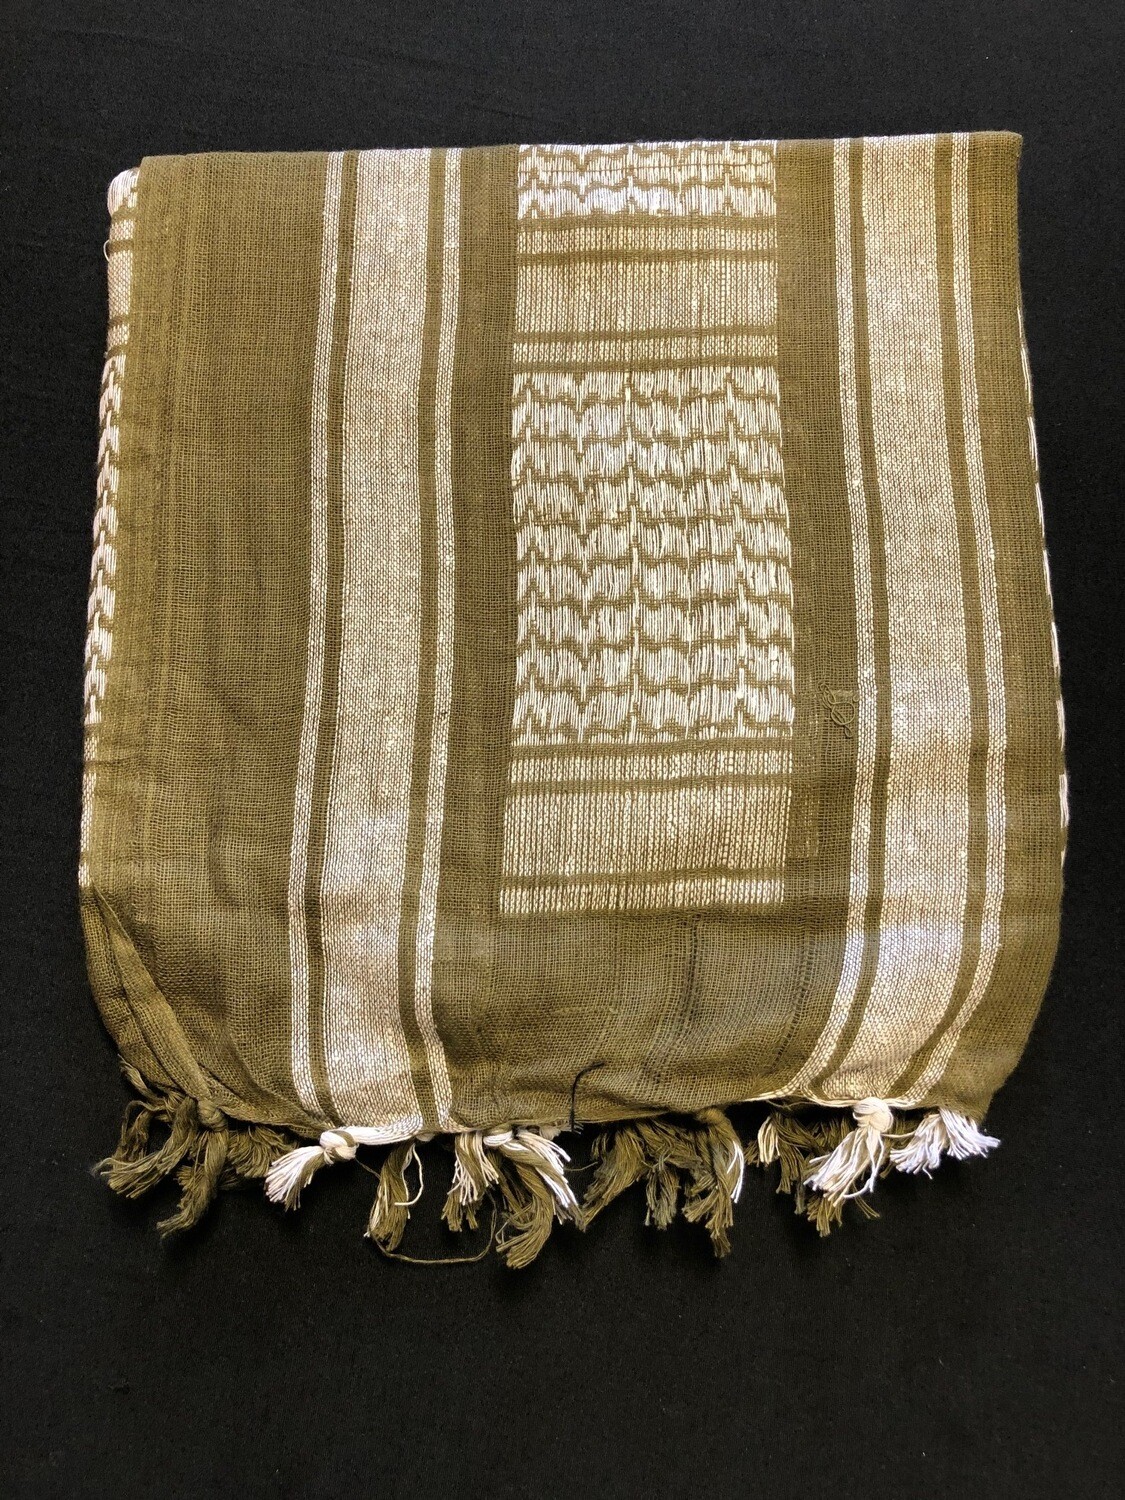 green prayer shawl/ head covering